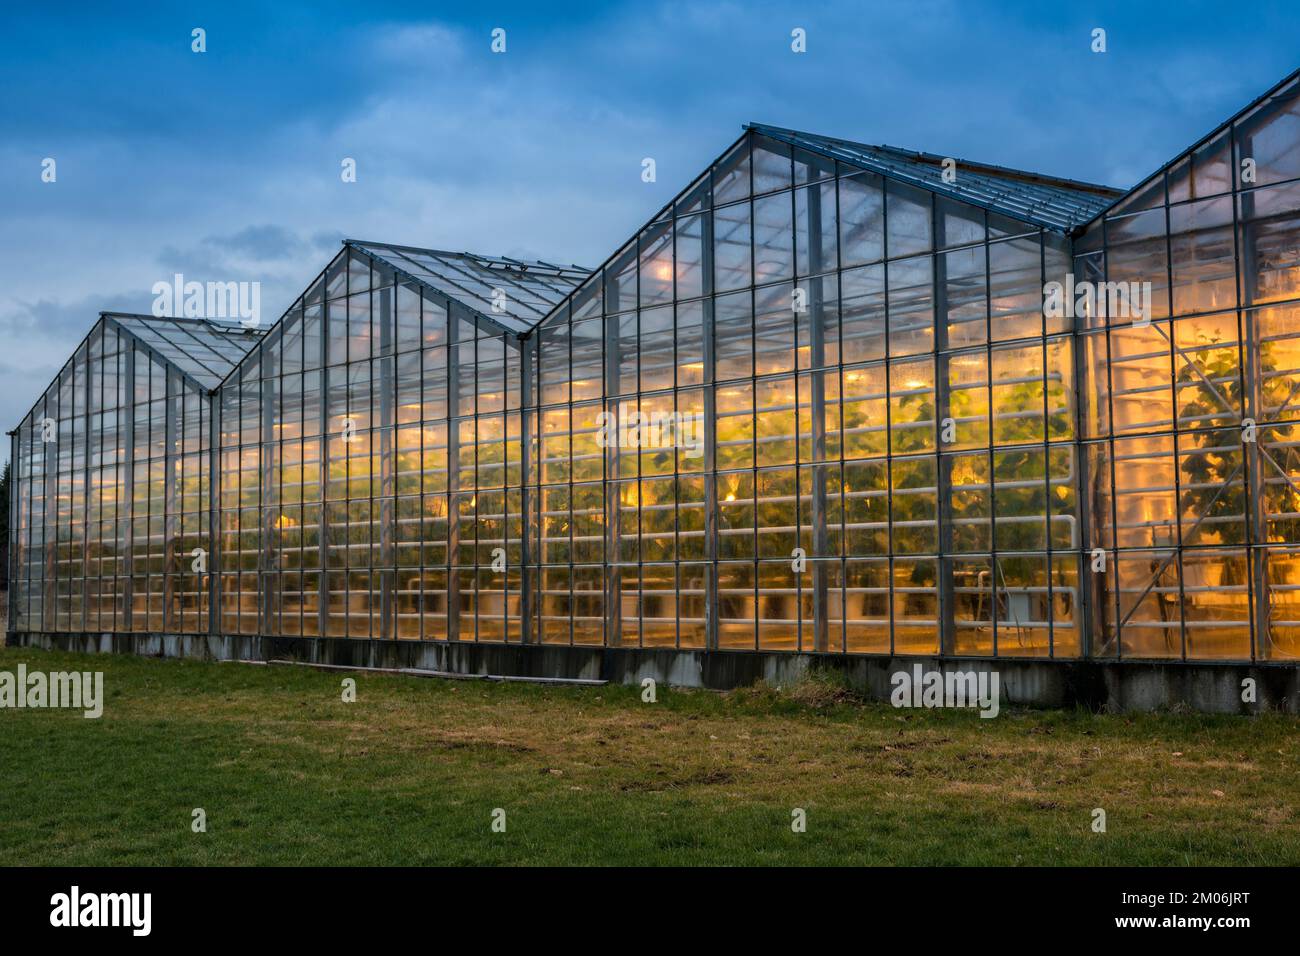 Illuminated greenhouses at dusk, heated with geothermal energy, Iceland Stock Photo